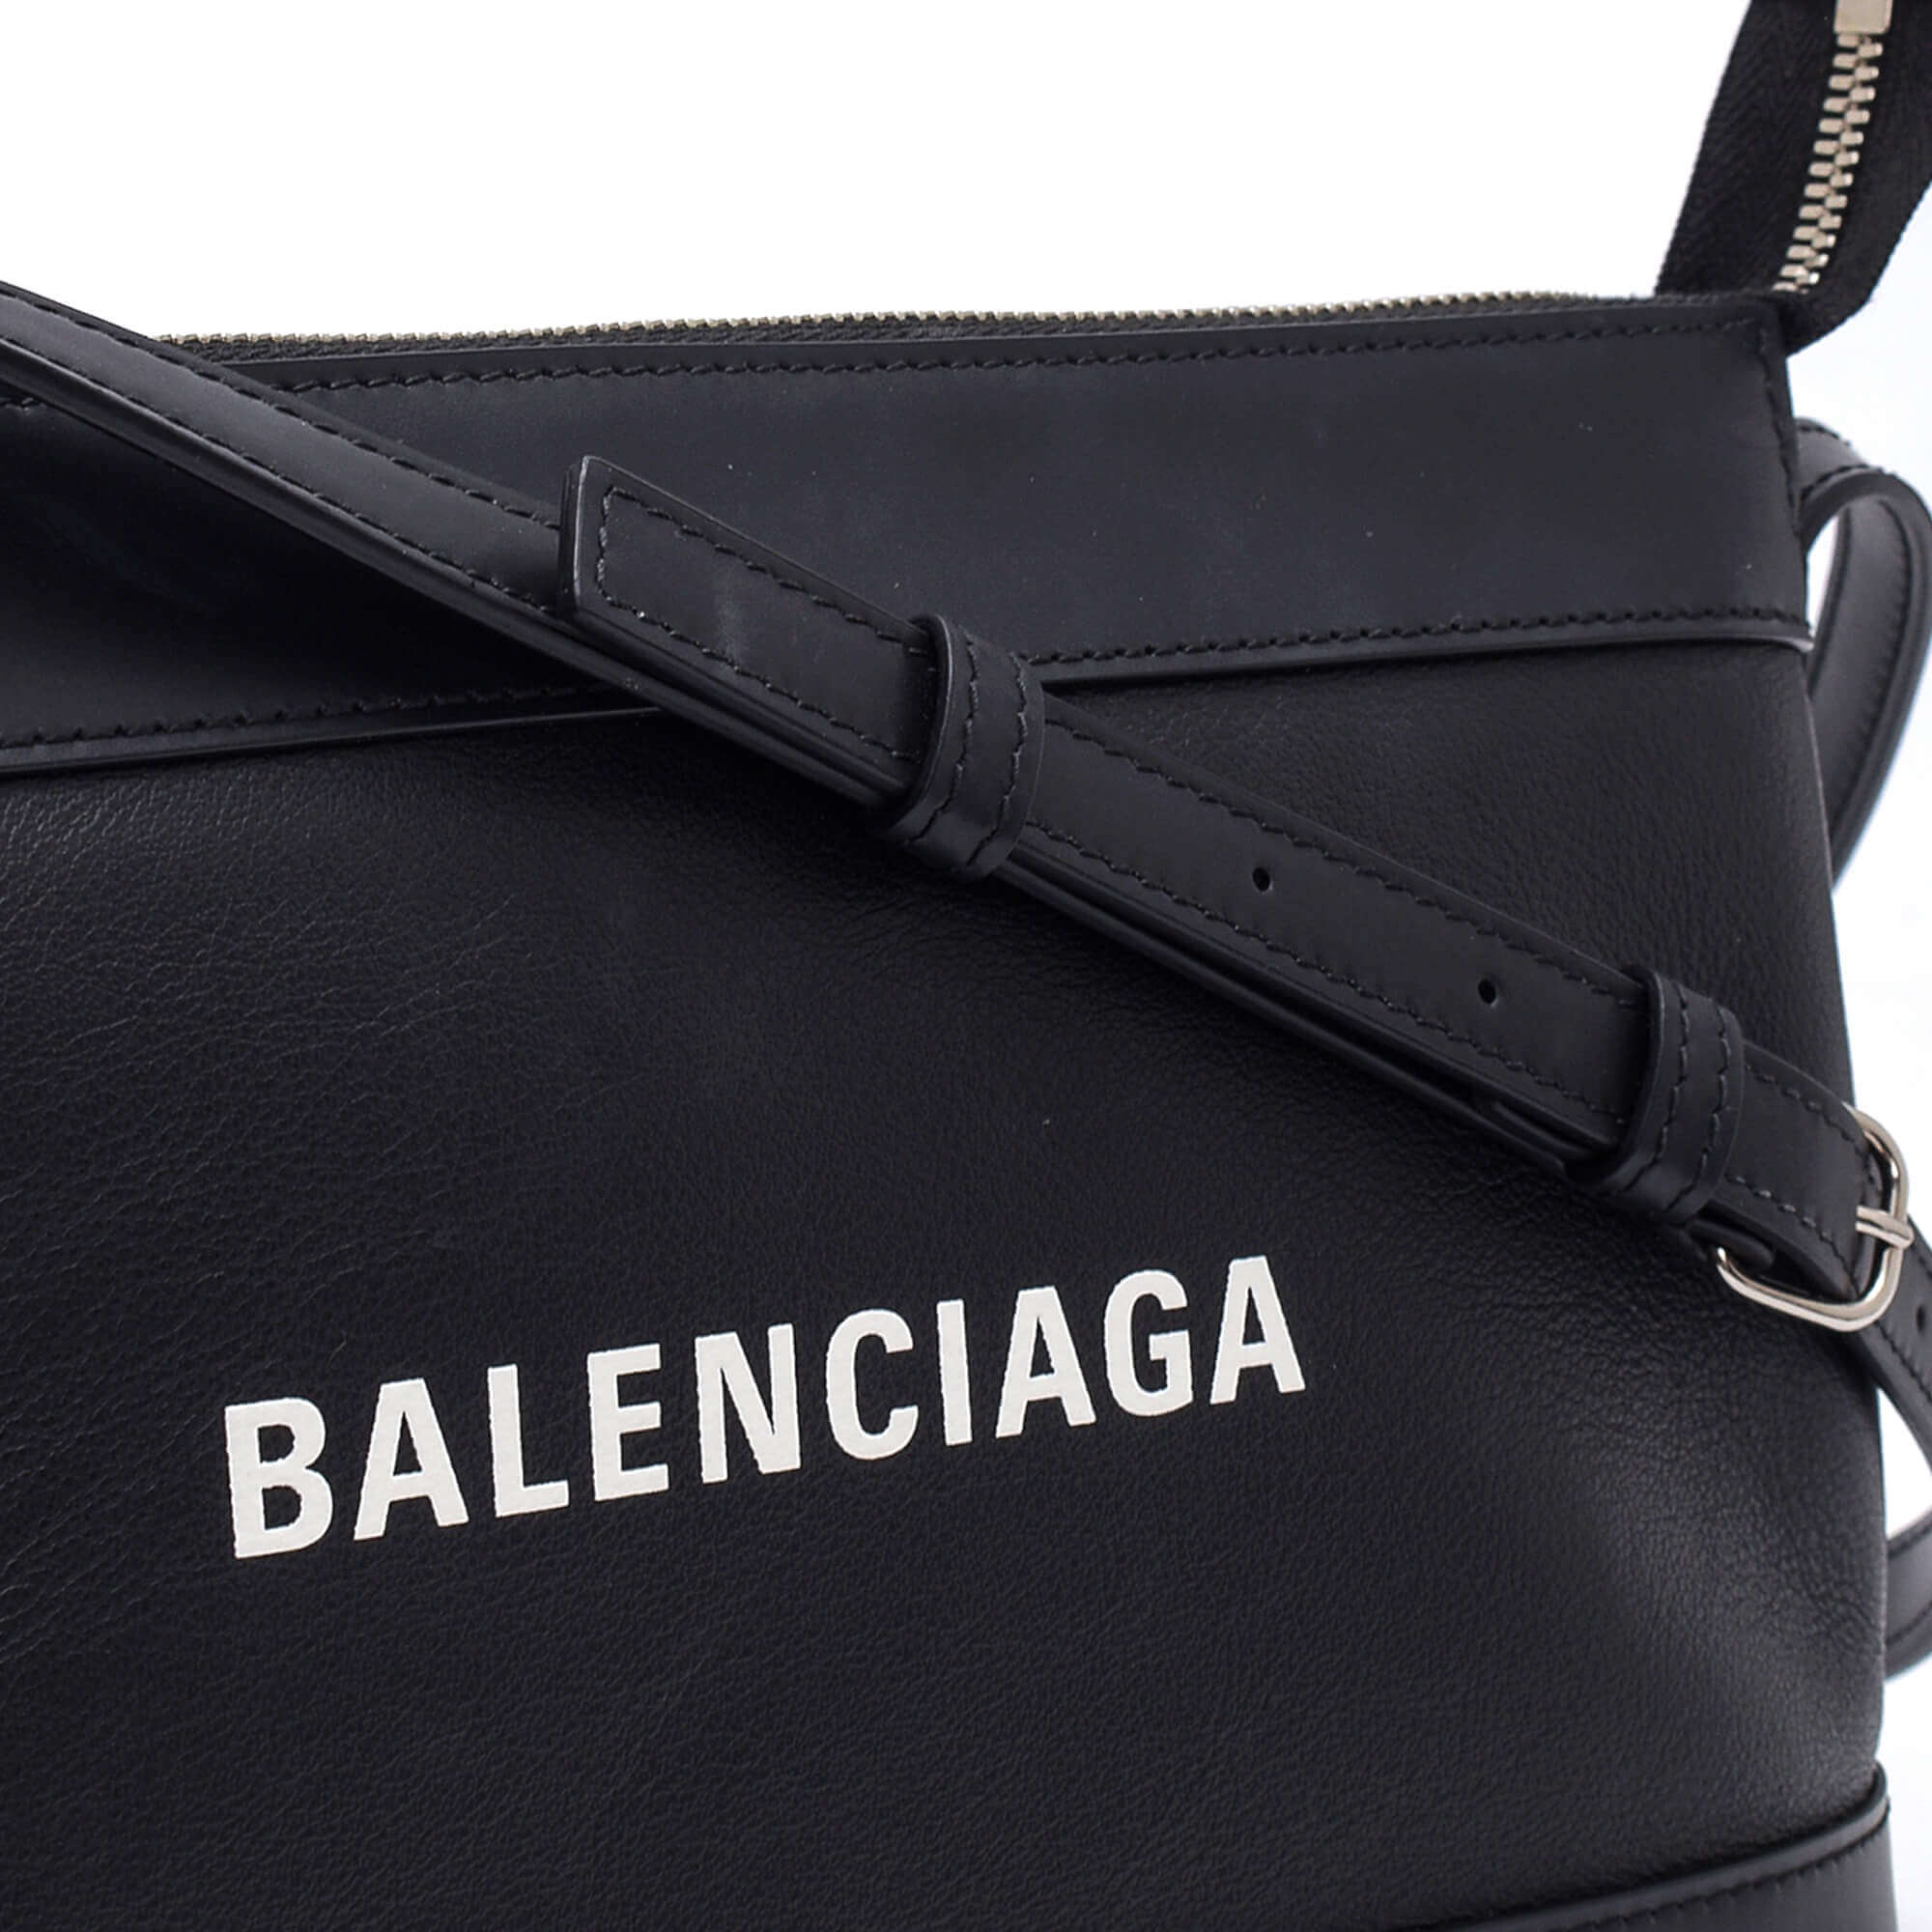 Balenciaga - Black Calfskin Leather Crossbody Bag